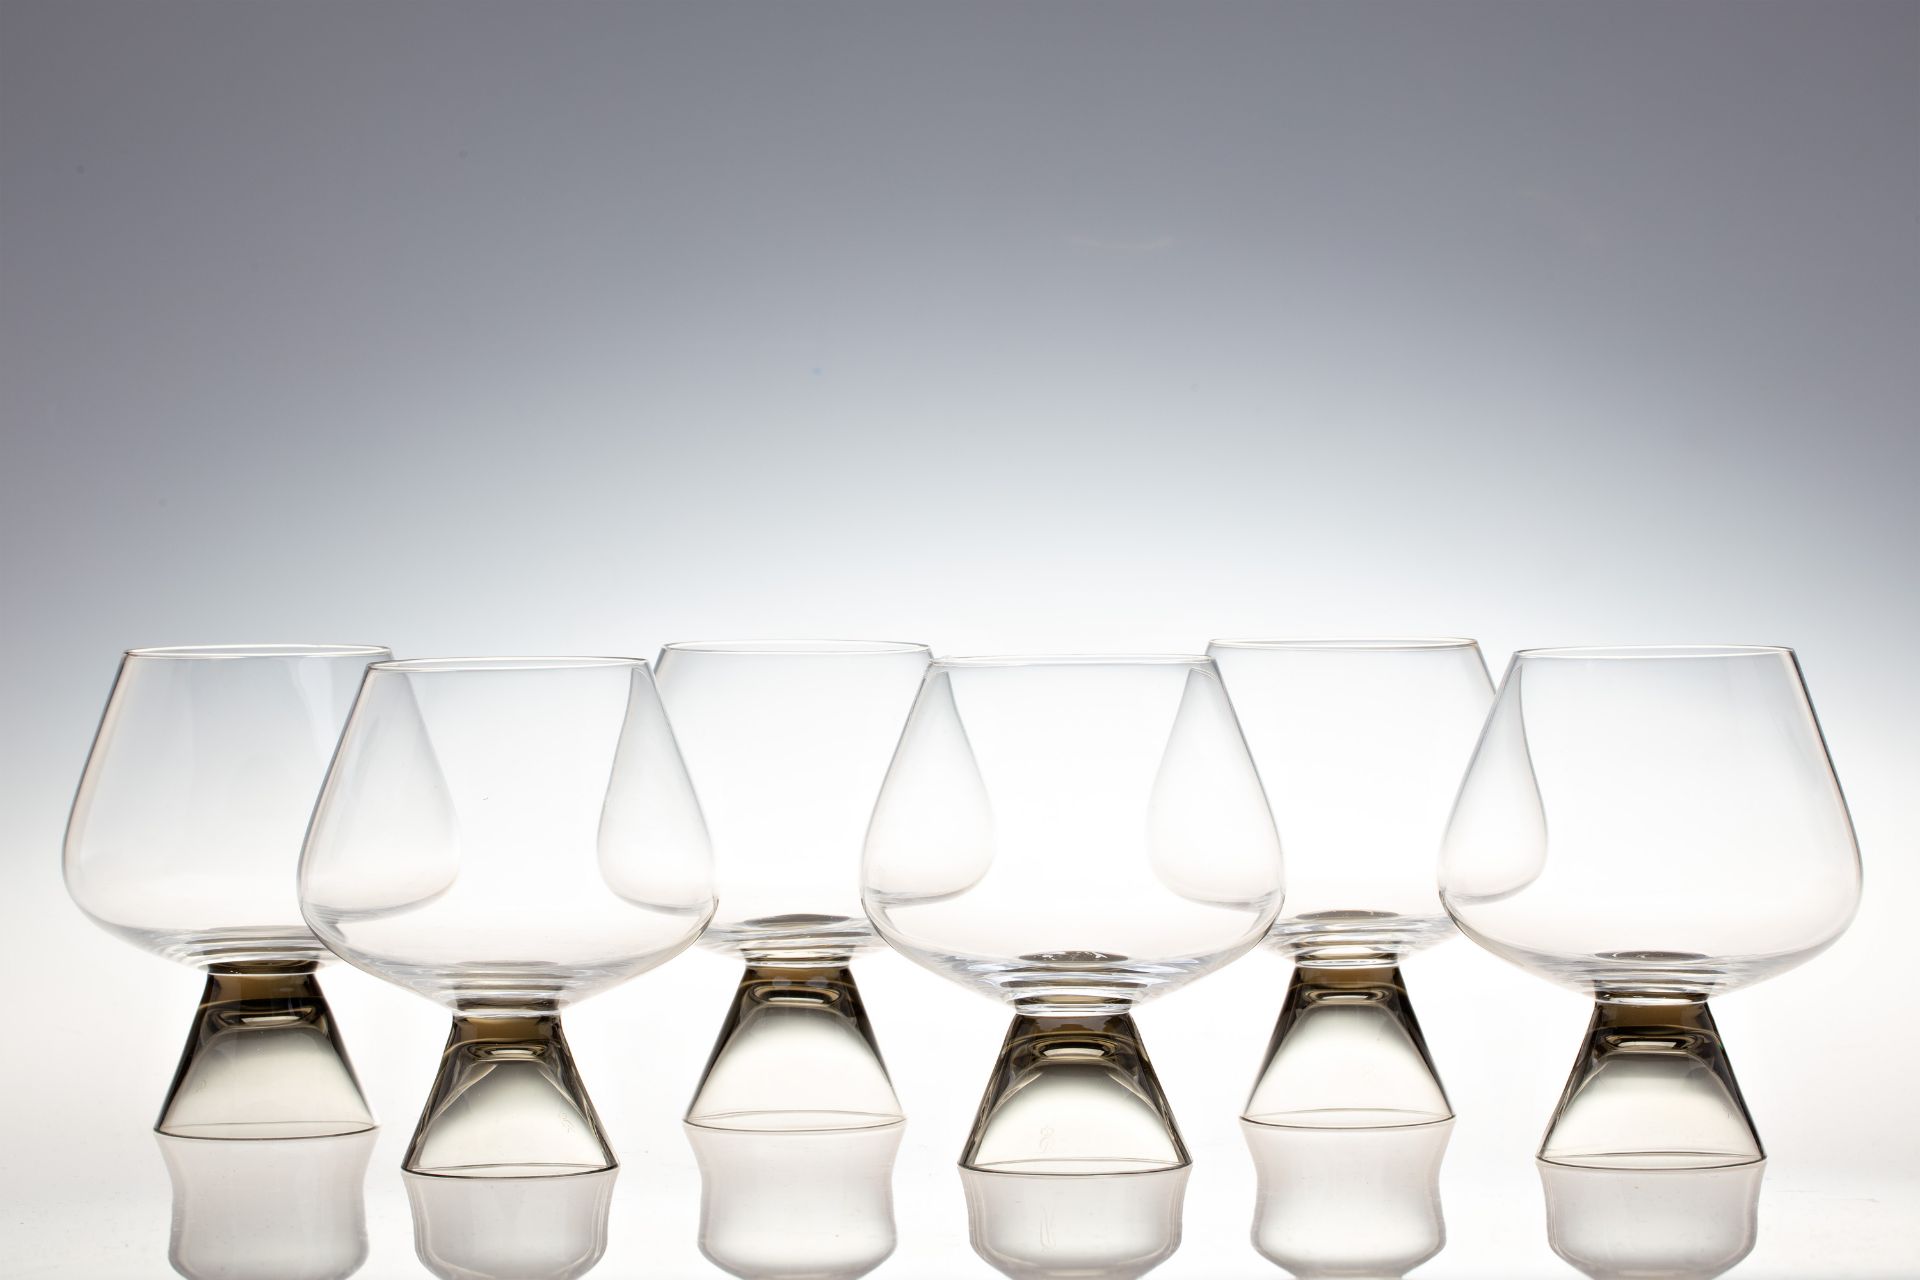 SIX COGNAC GLASSES | Rosenthal, designed by Elsa Fischer-Treyden (German / Germany - 1950s)